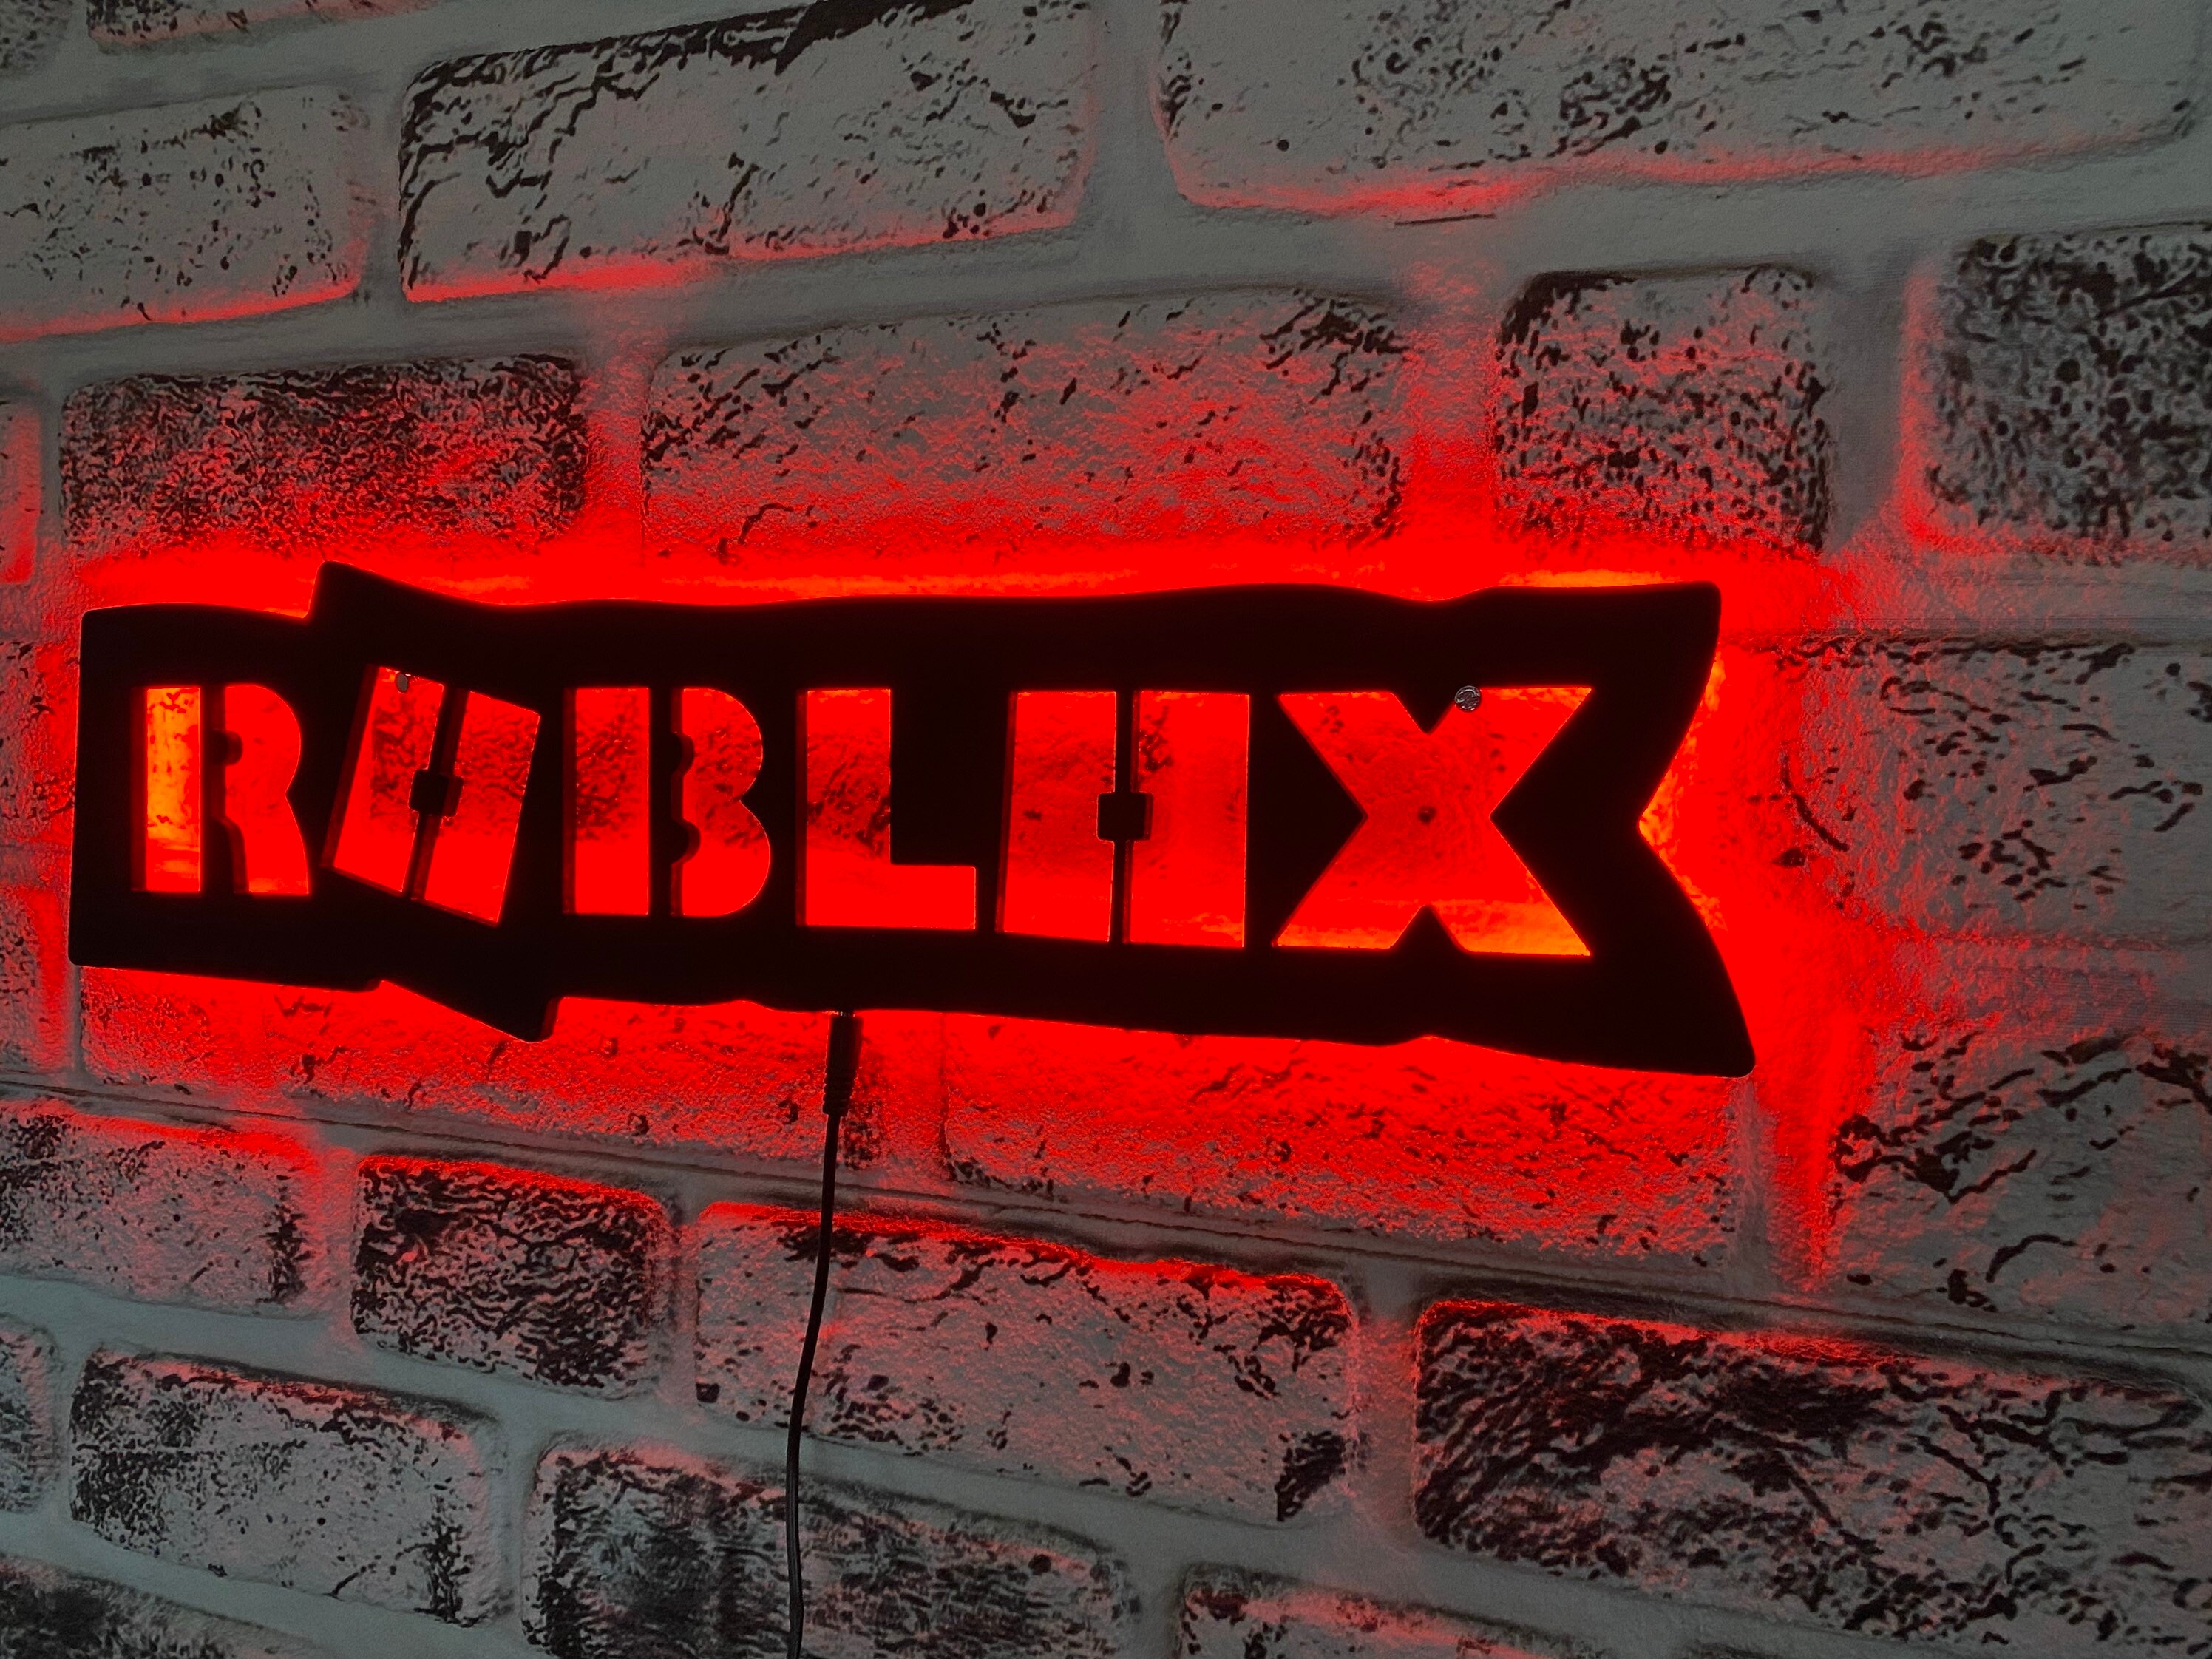 Roblox blue logo blue brickwall, Roblox logo, online games, Roblox